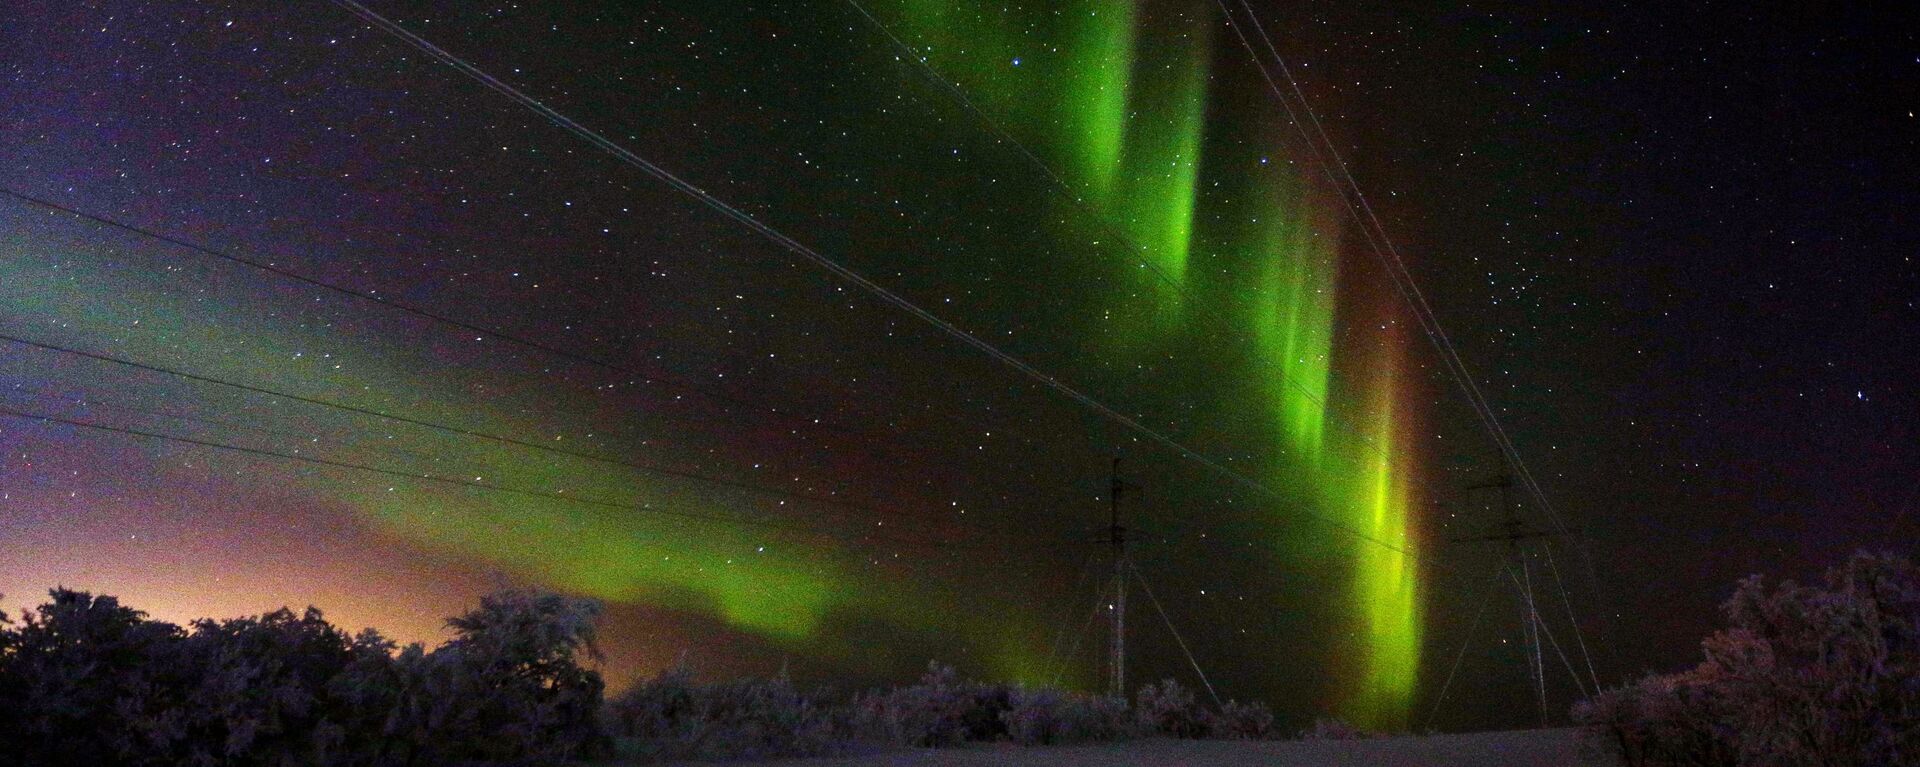 The northern lights in the Murmansk Oblast, Russia - Sputnik International, 1920, 08.06.2021